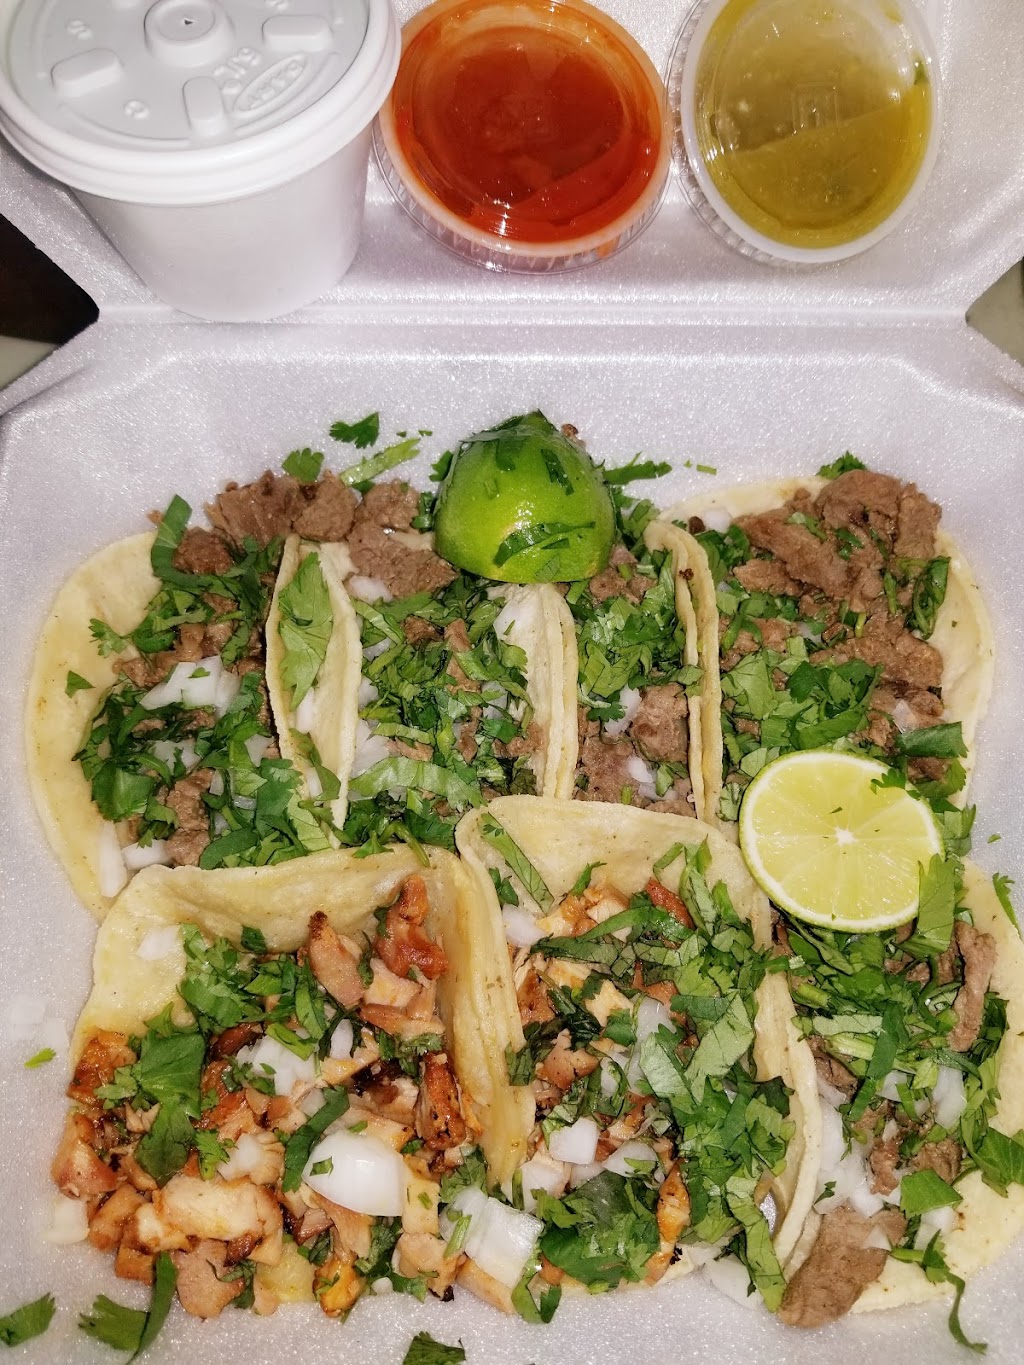 Alamillas Mexican Food | 841 N Main St, Corona, CA 92880, USA | Phone: (951) 279-9854